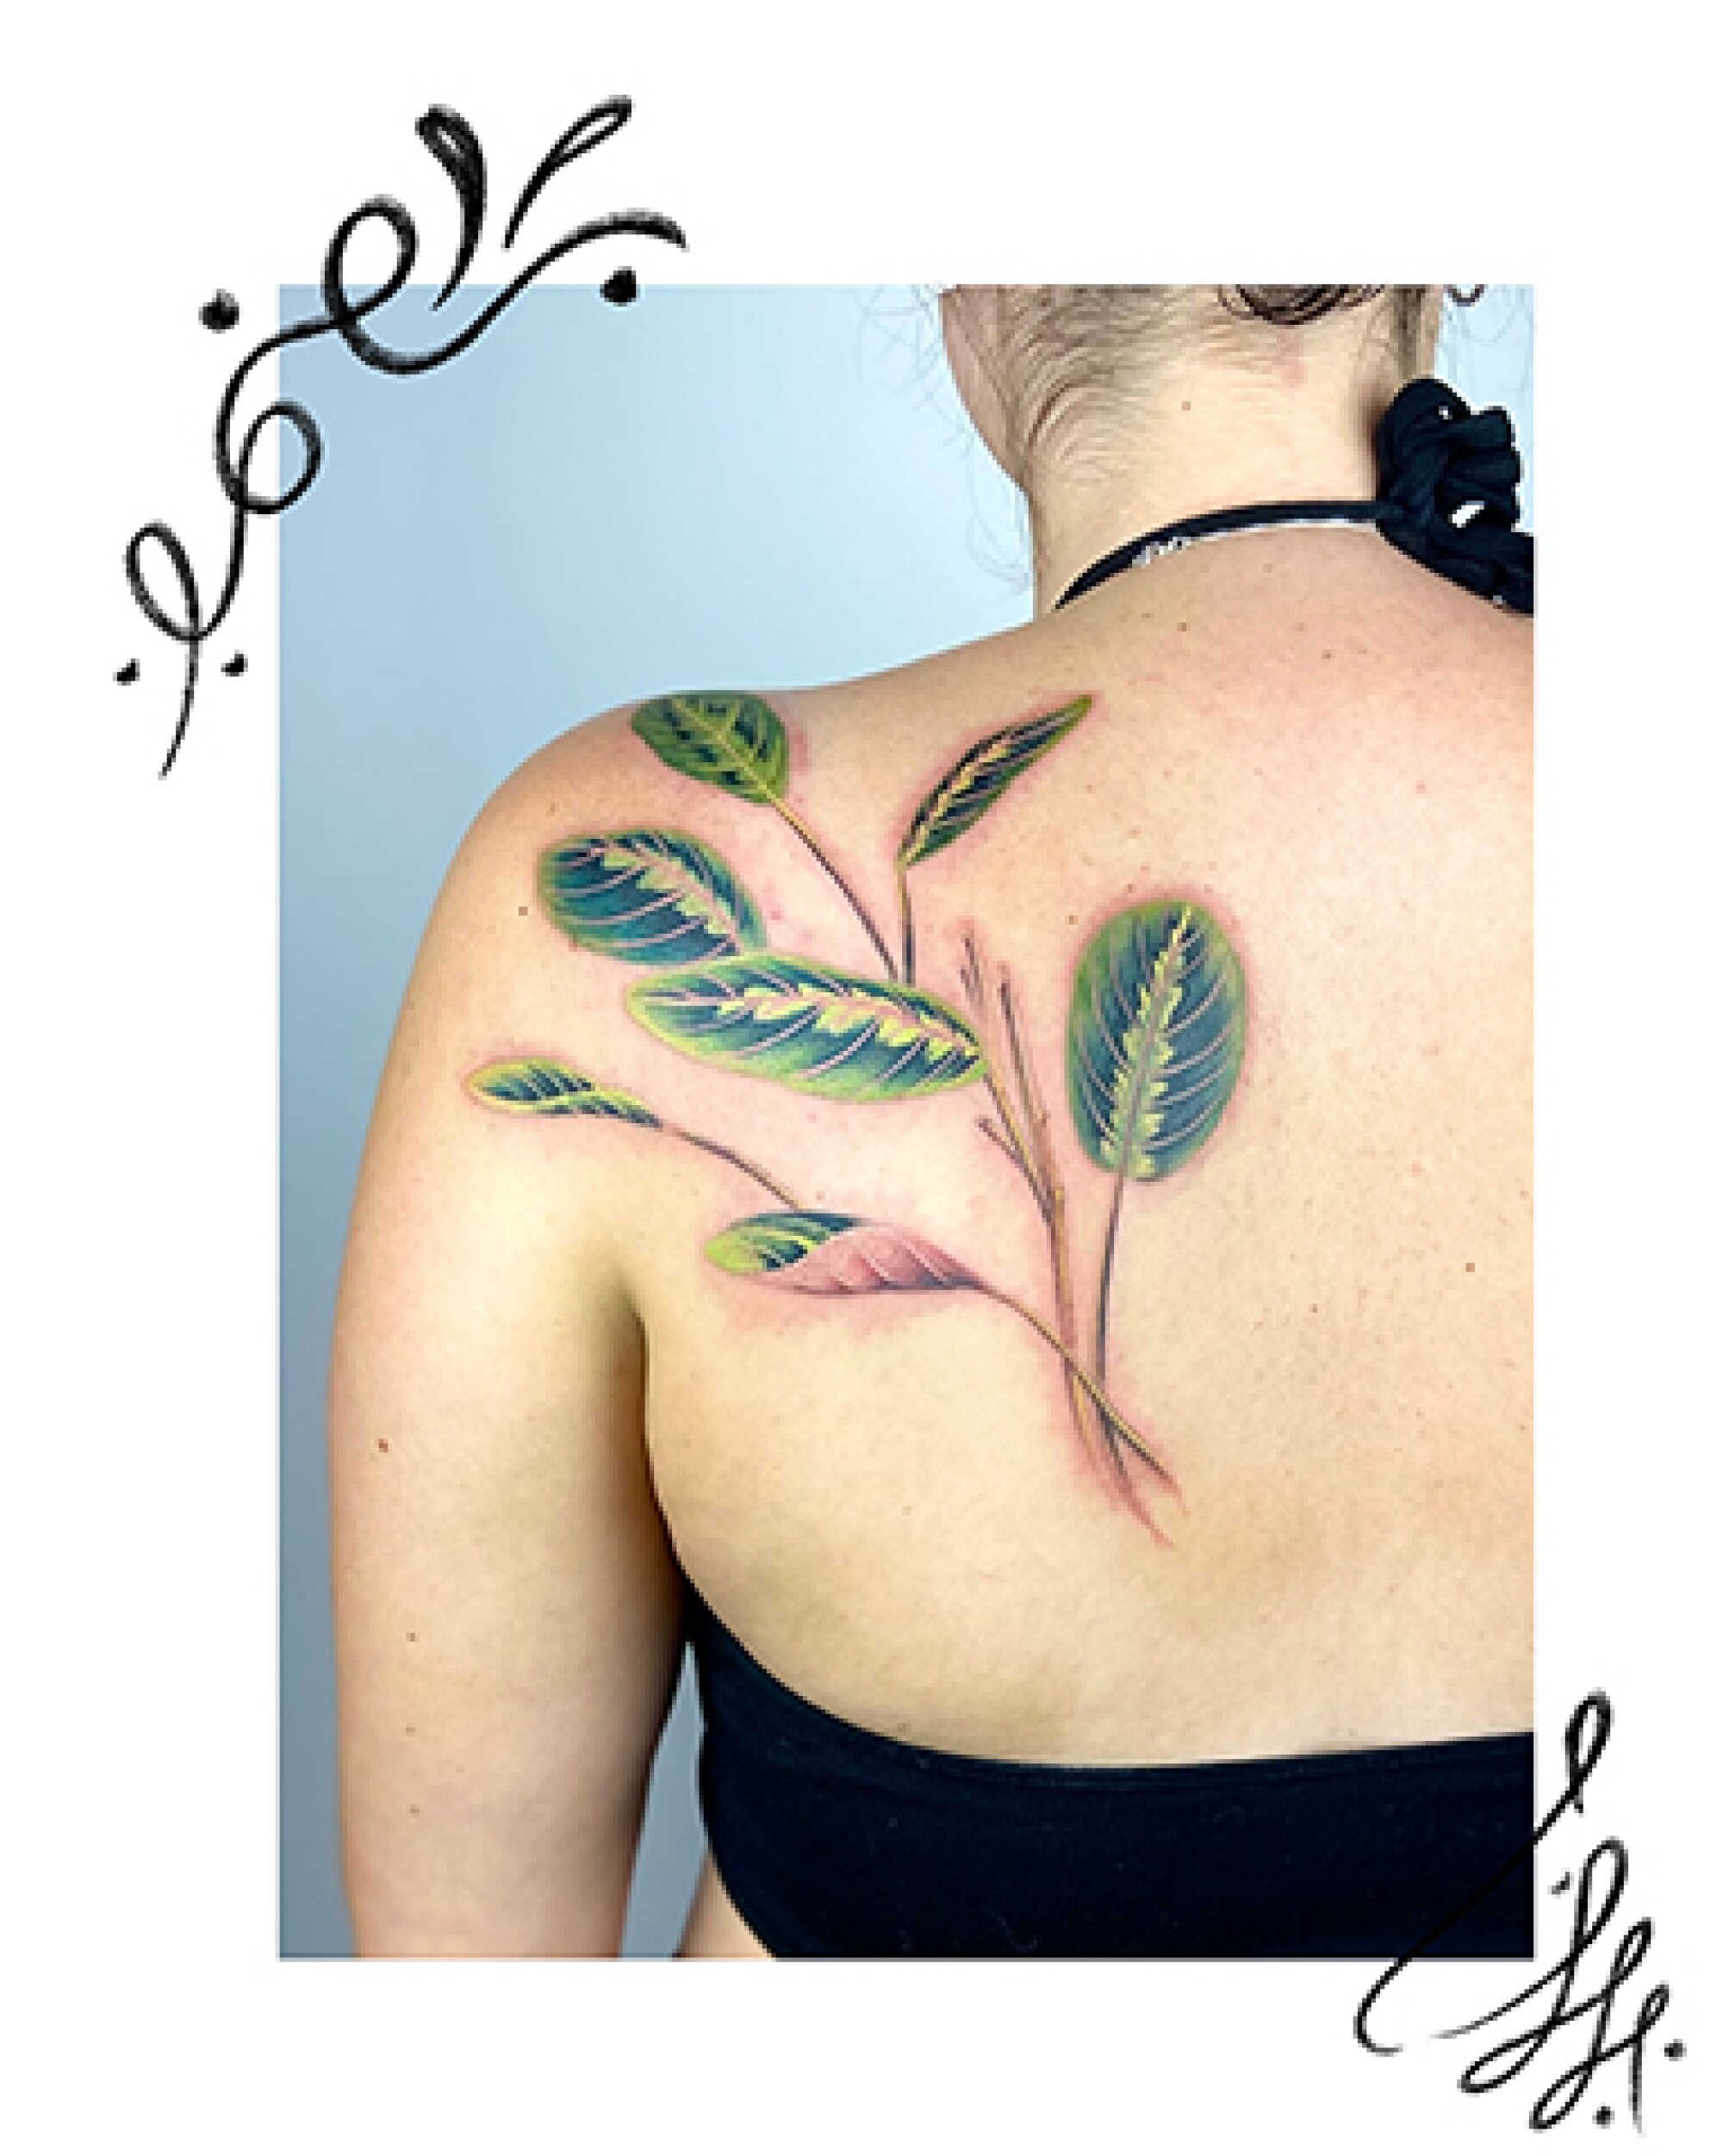 Prayer plant tattoo on a back.